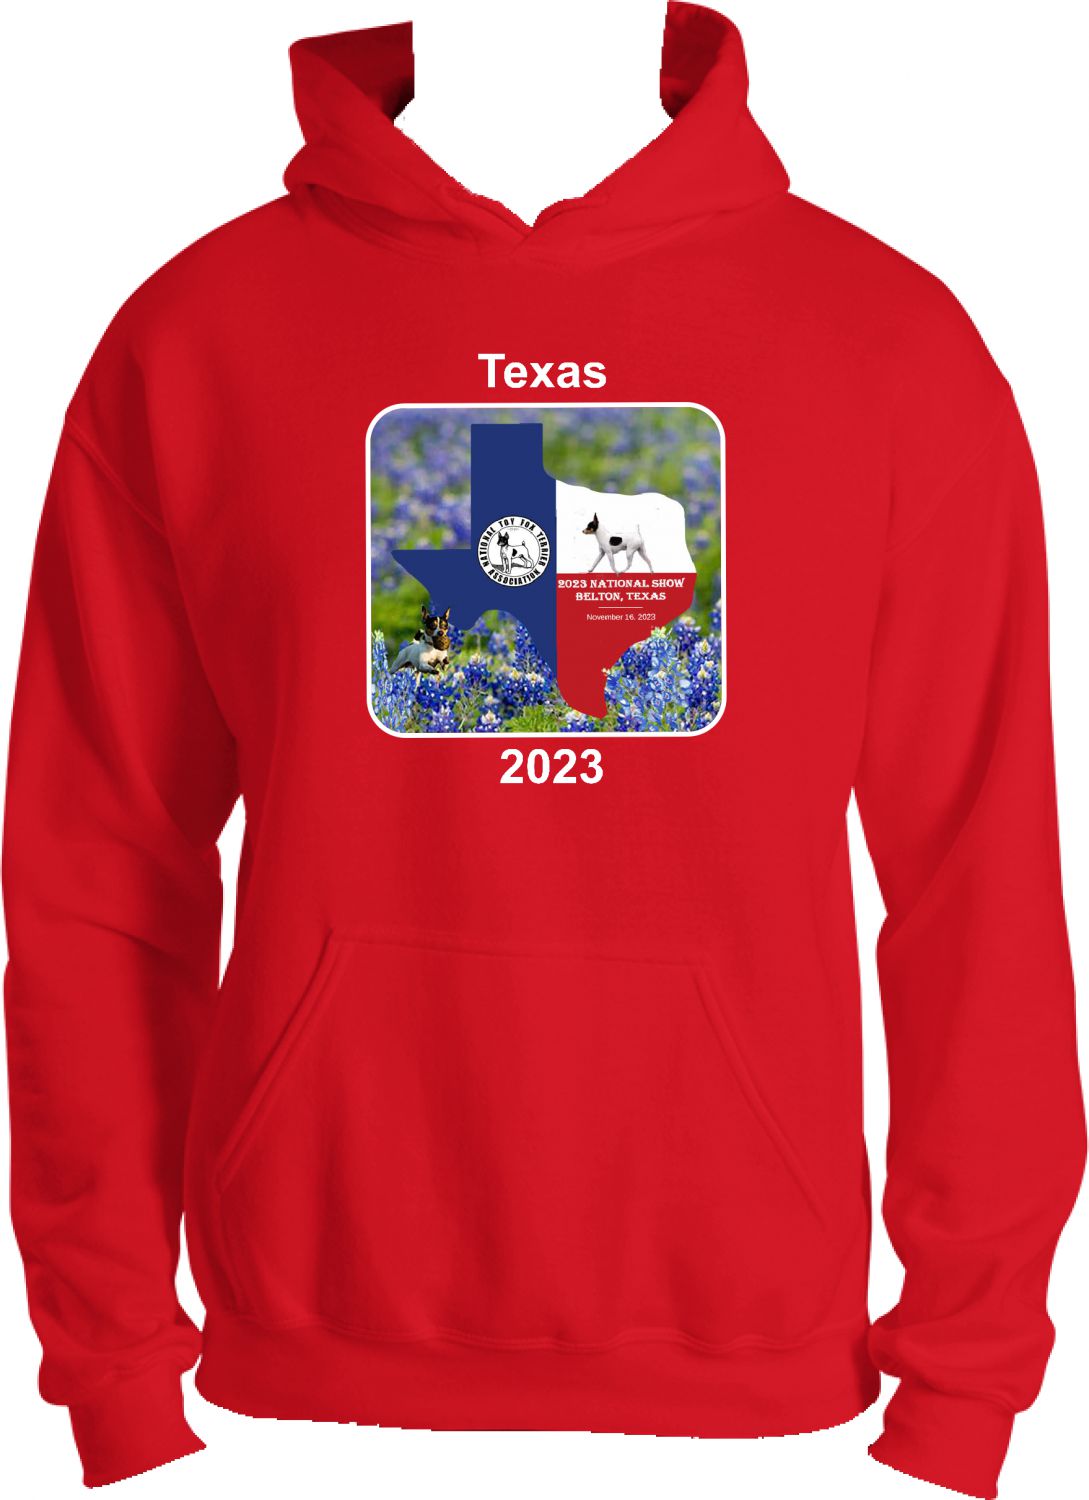 NTFTA Nov 2023. Texas Red Hoodie